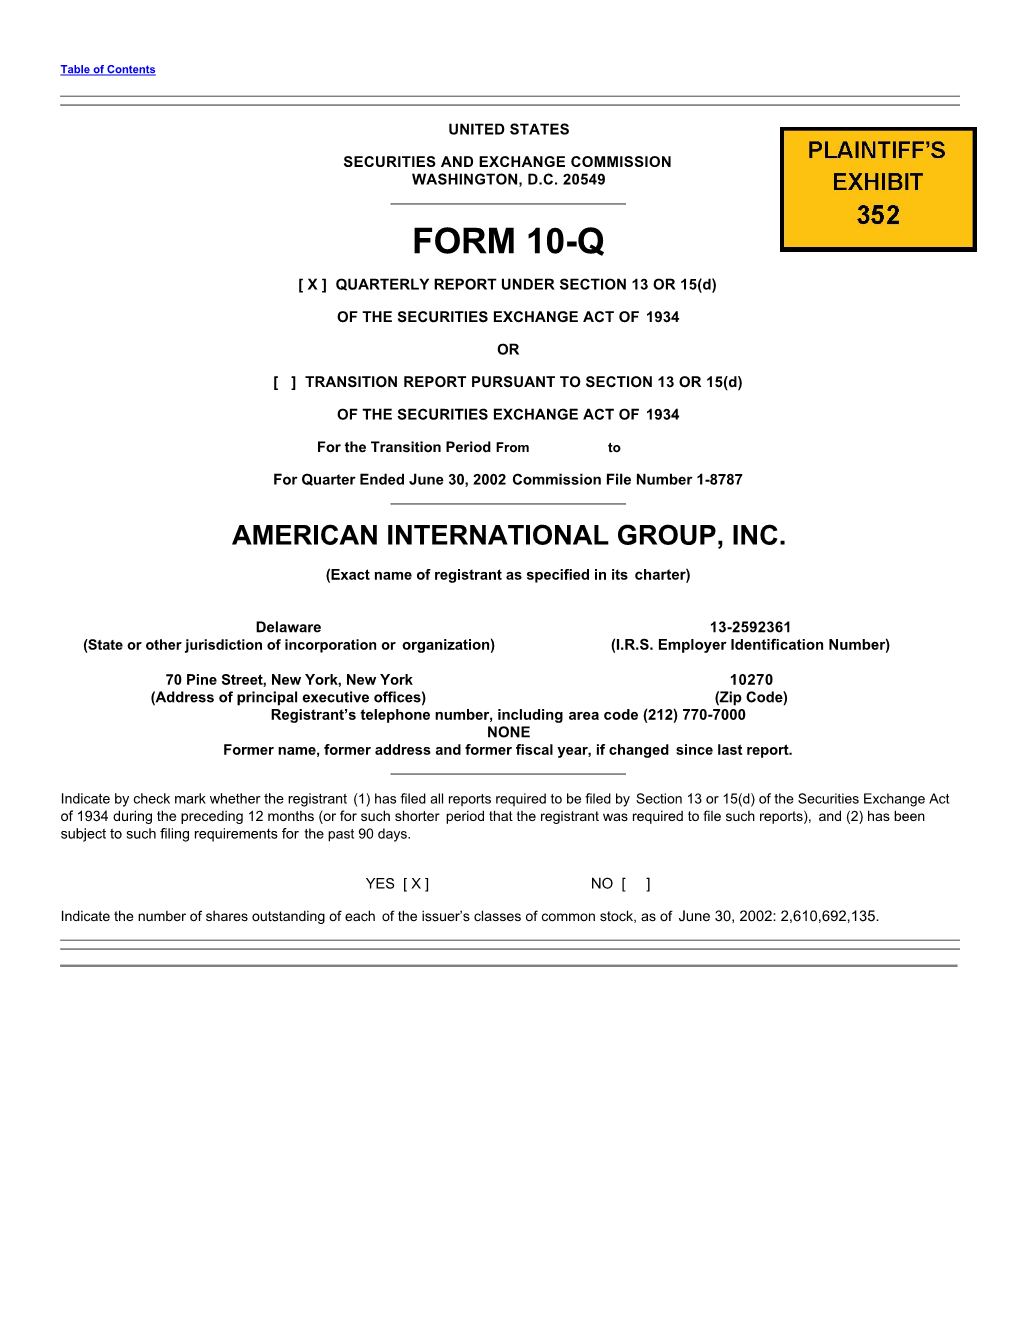 PX-352: 8/8/2002: American International Group, Inc. Form 10-Q